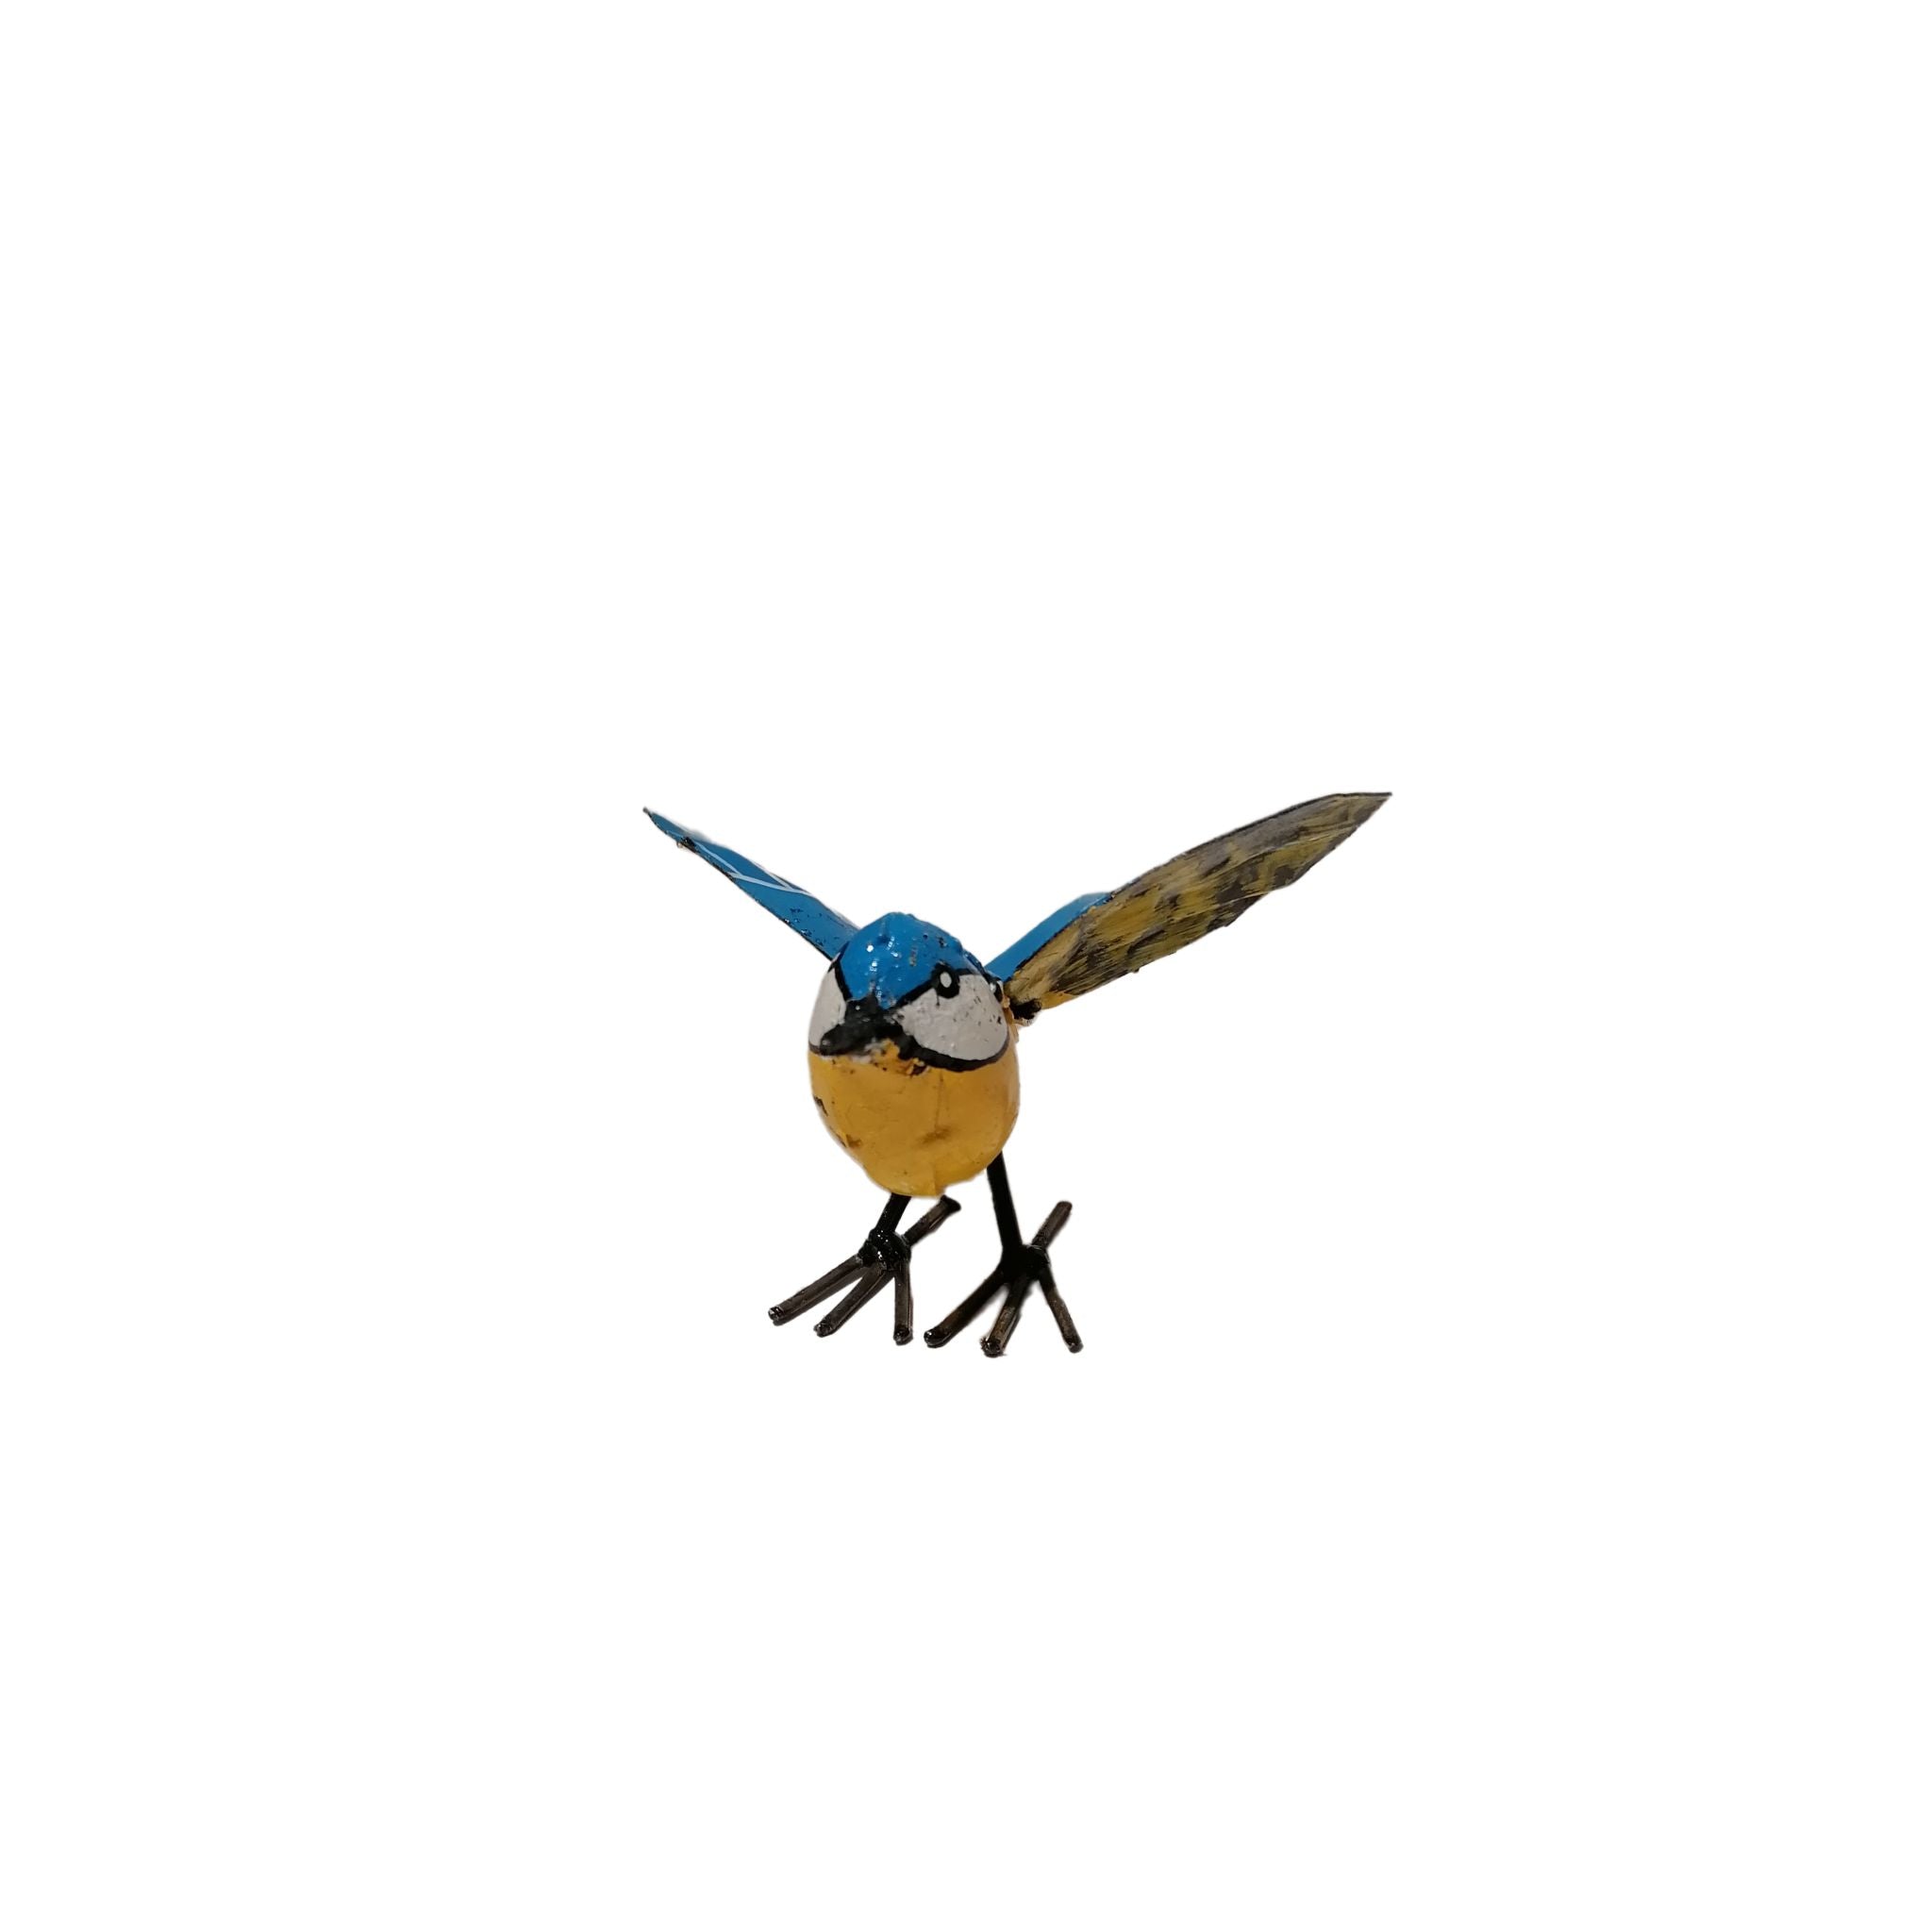 Bluetit Bird Wings Open Front view 